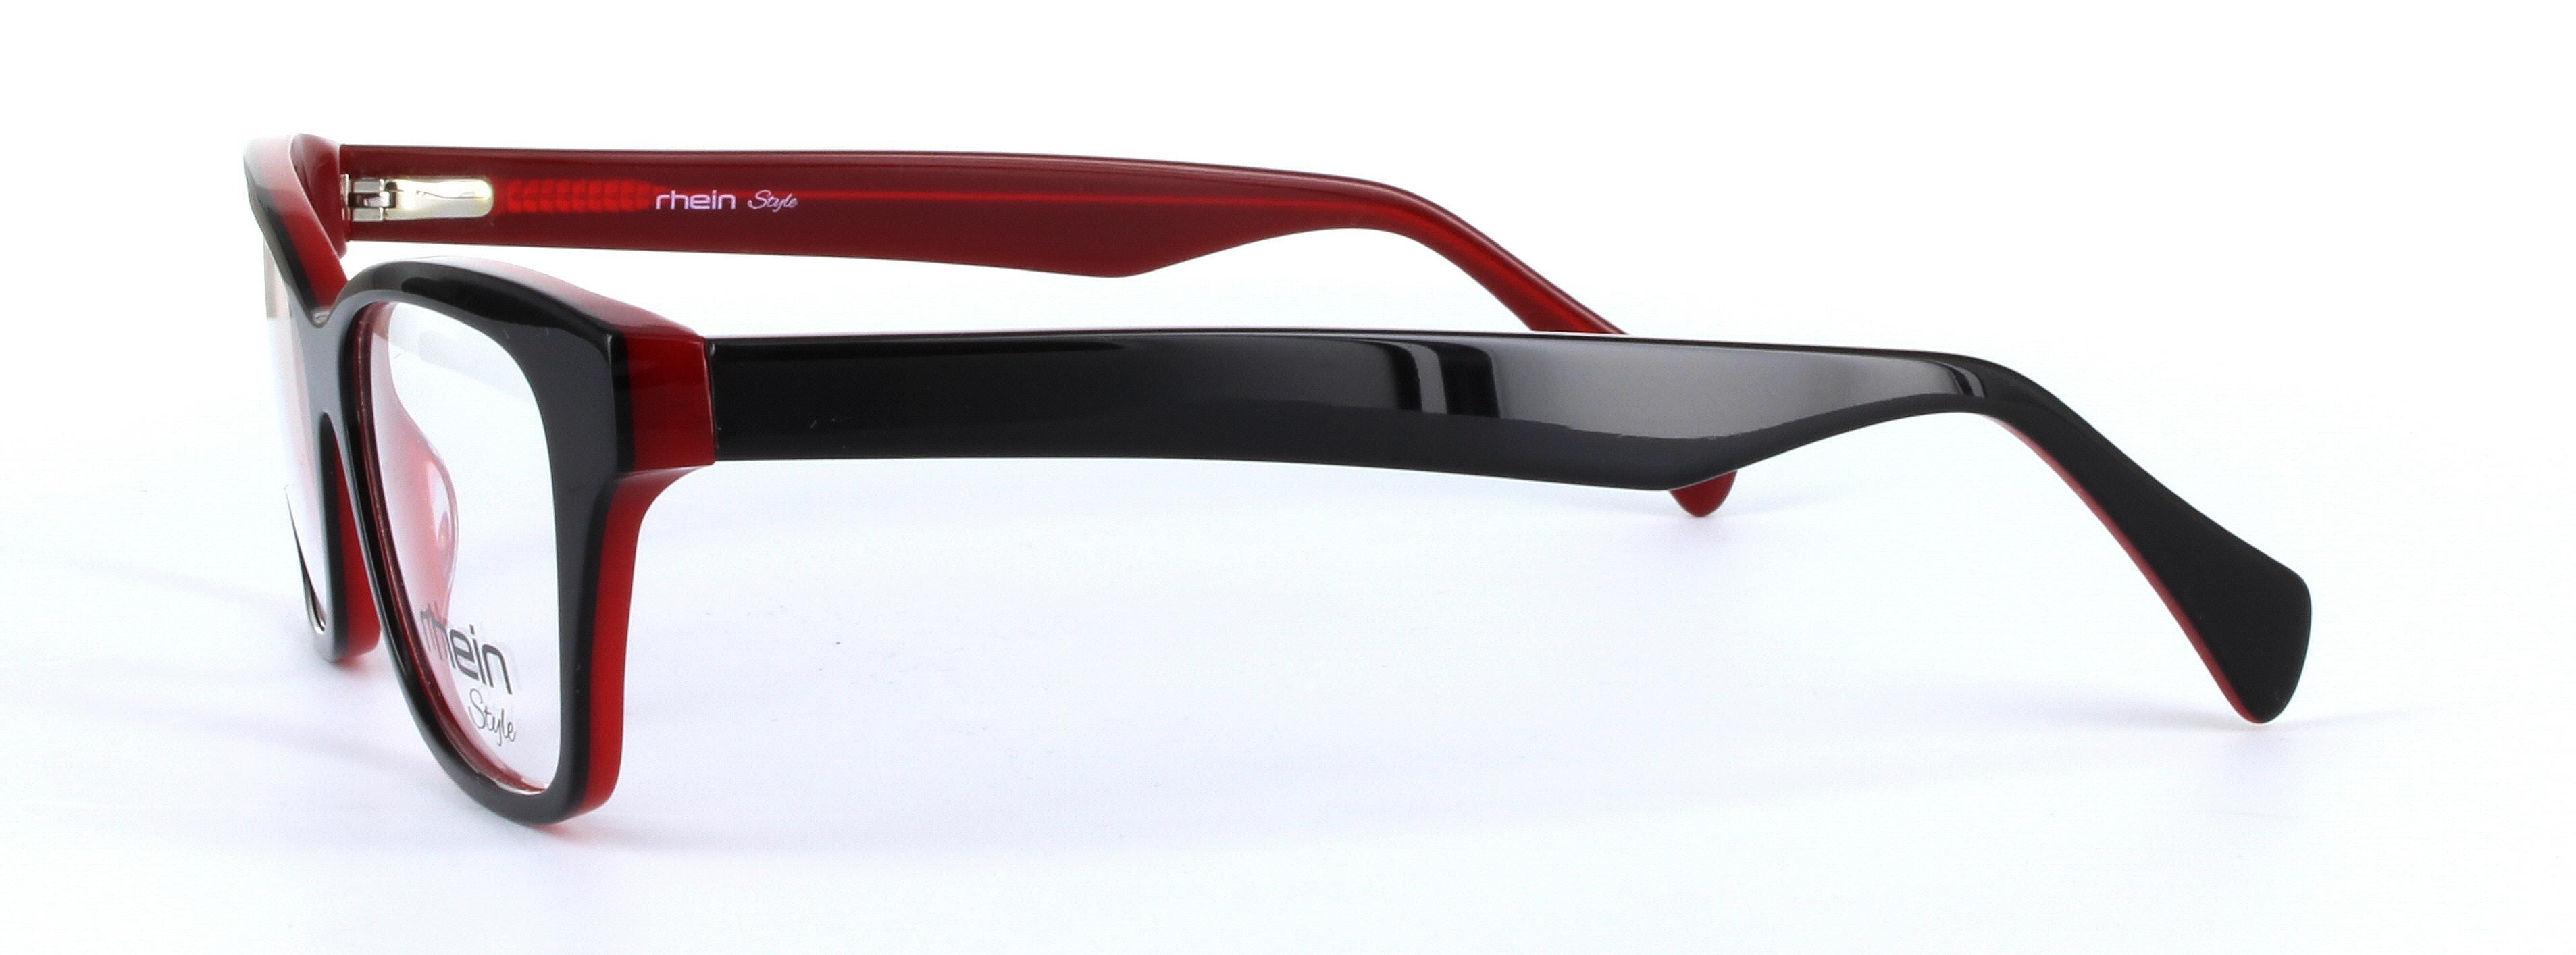 Felia Black Full Rim Oval Round Plastic Glasses - Image View 2